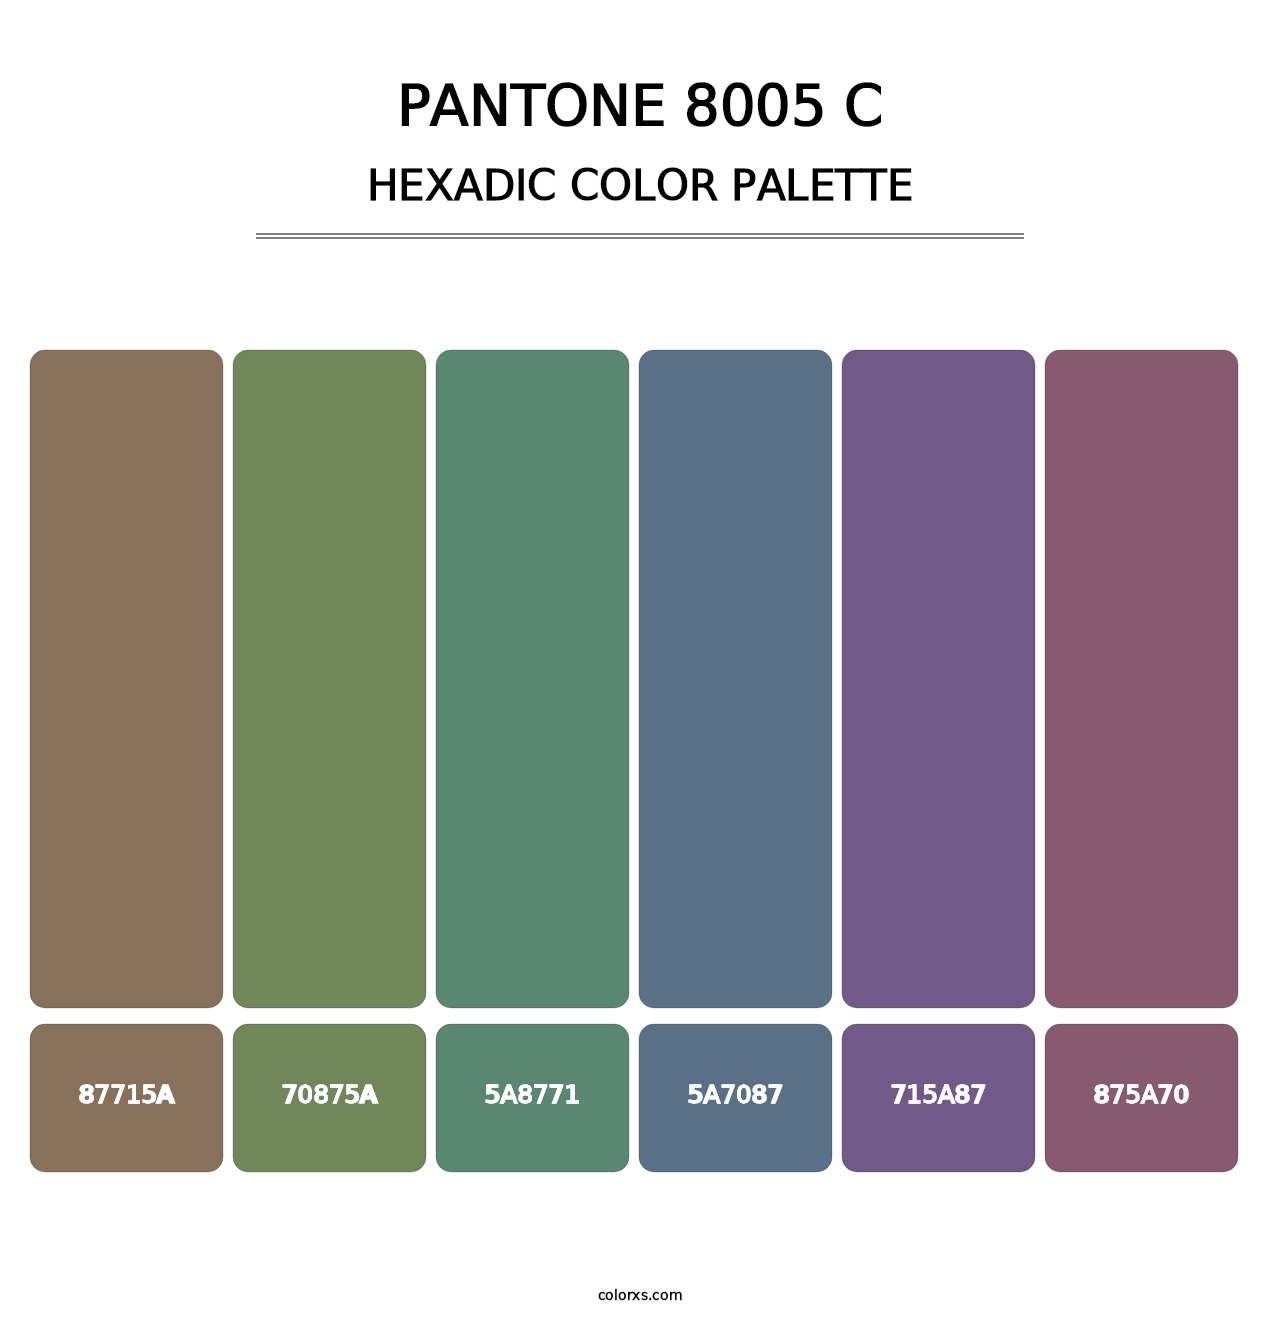 PANTONE 8005 C - Hexadic Color Palette